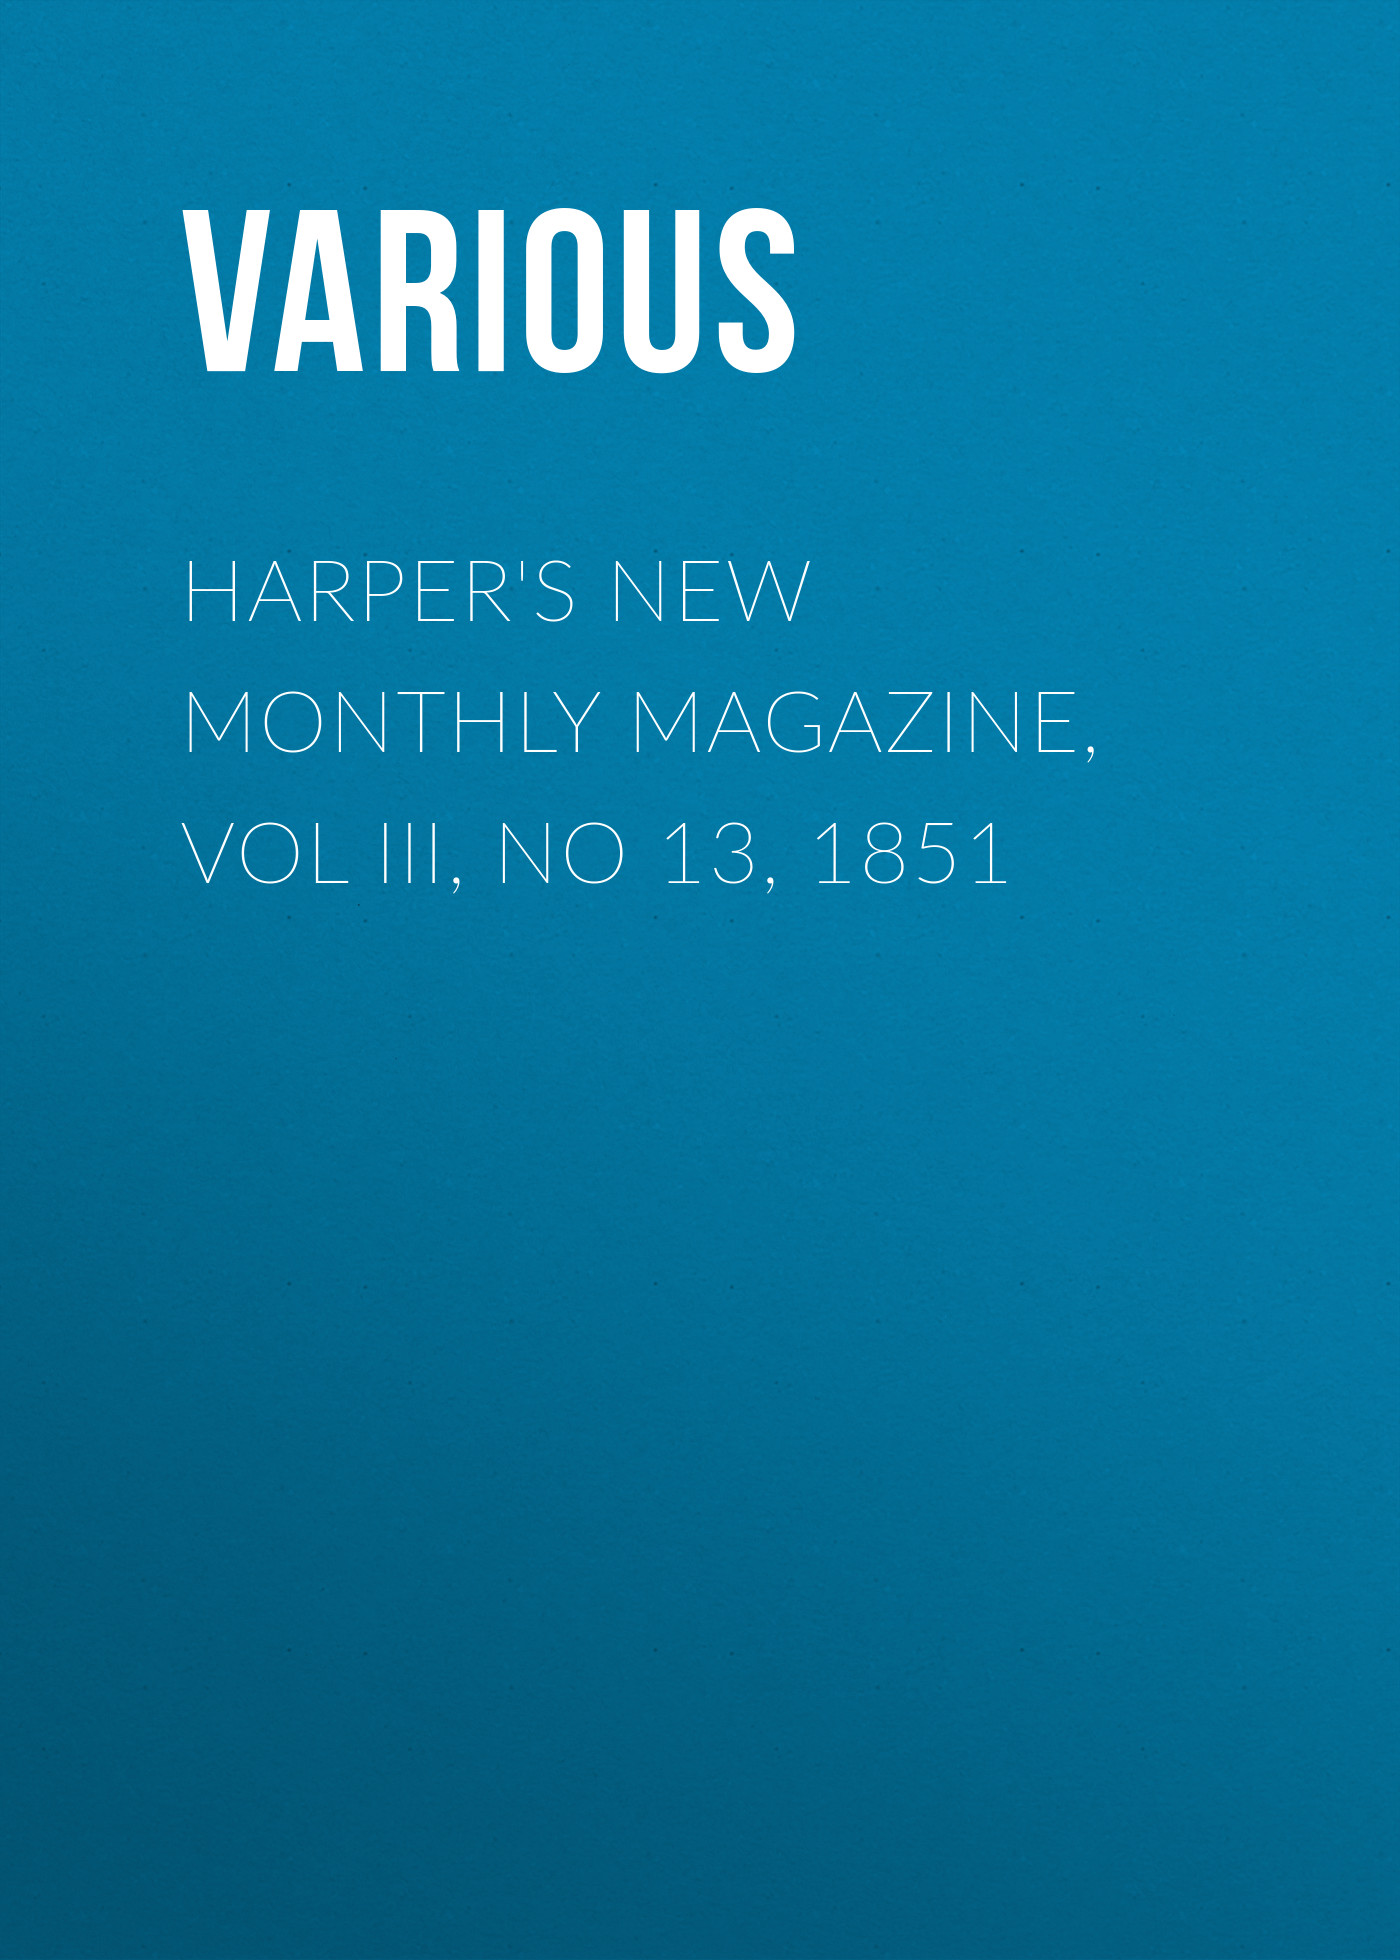 Harper's New Monthly Magazine, Vol III, No 13, 1851